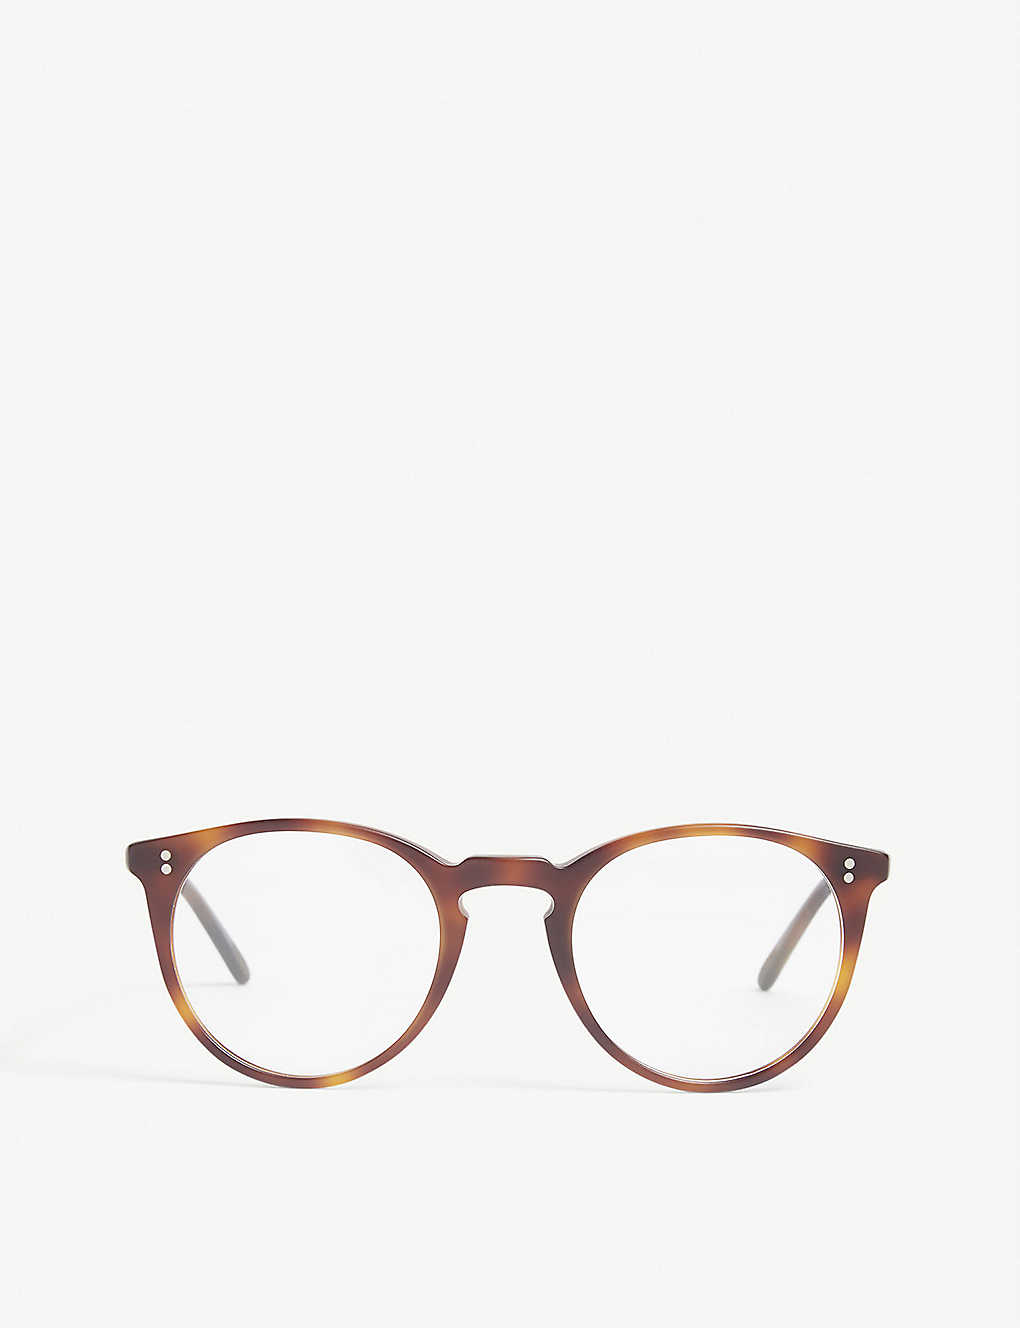 Oliver Peoples Men's Brown O'malley Round-frame Glasses